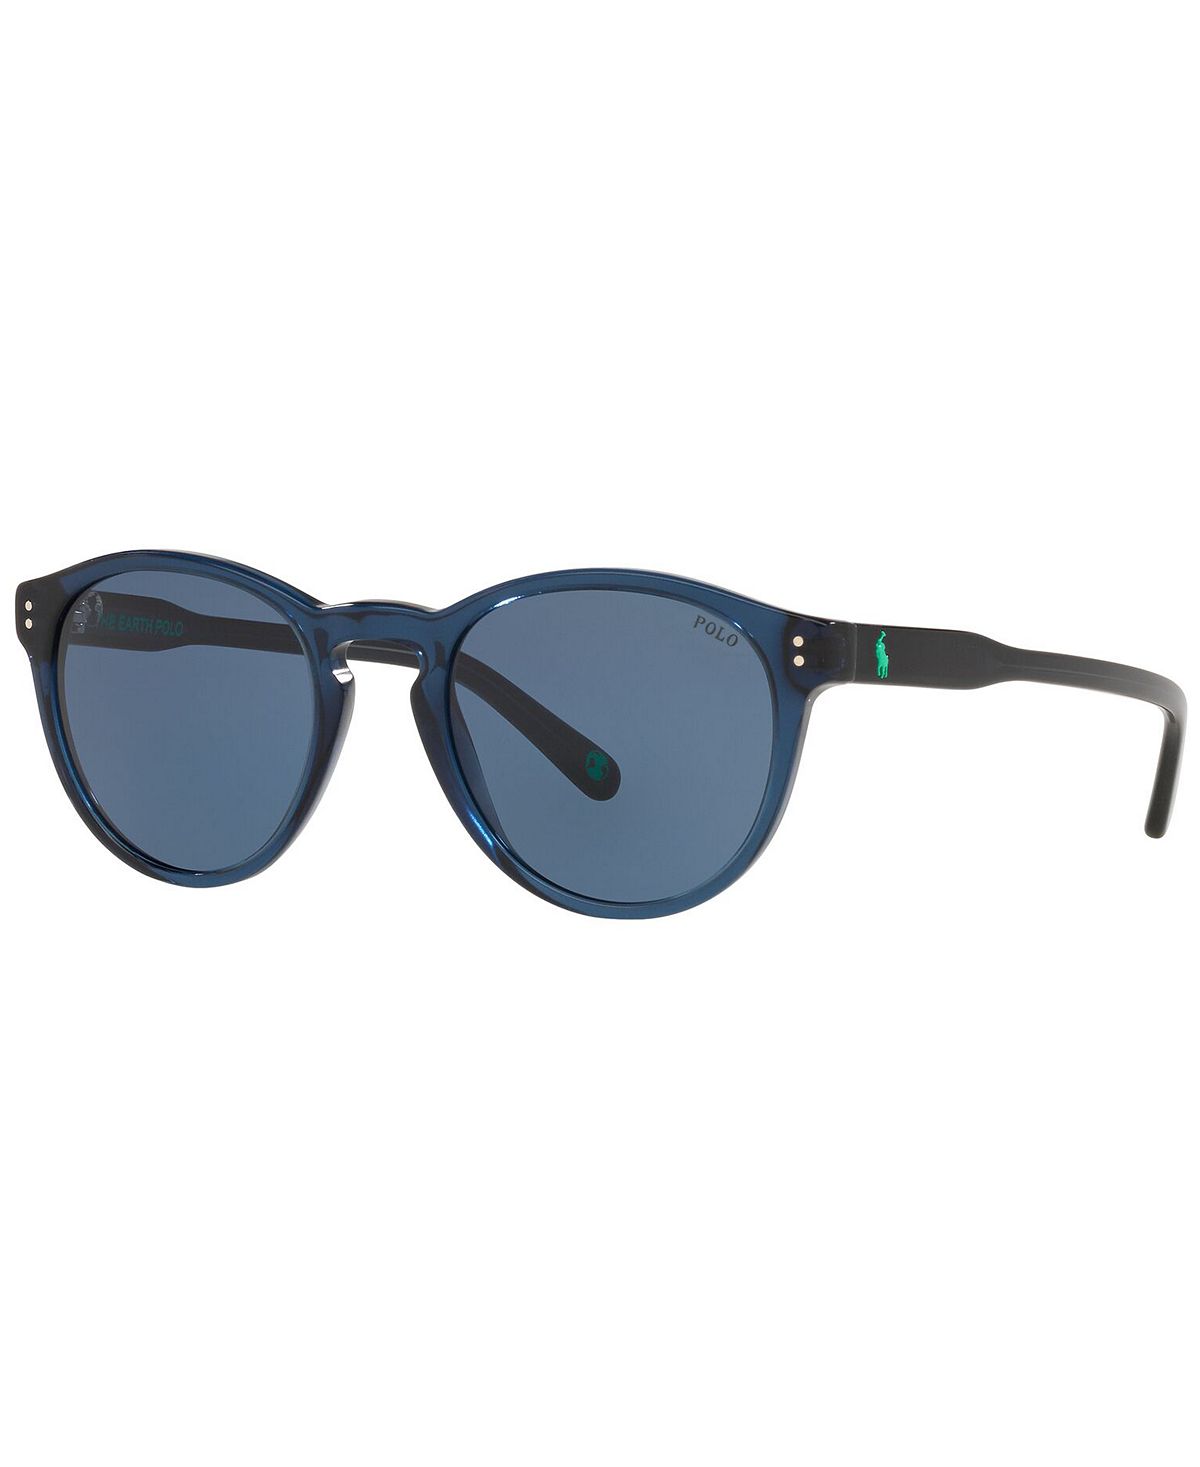 Мужские солнцезащитные очки, PH4172 50 Polo Ralph Lauren apocalyptica 7th symphony 2lp reissue transparent blue vinyl